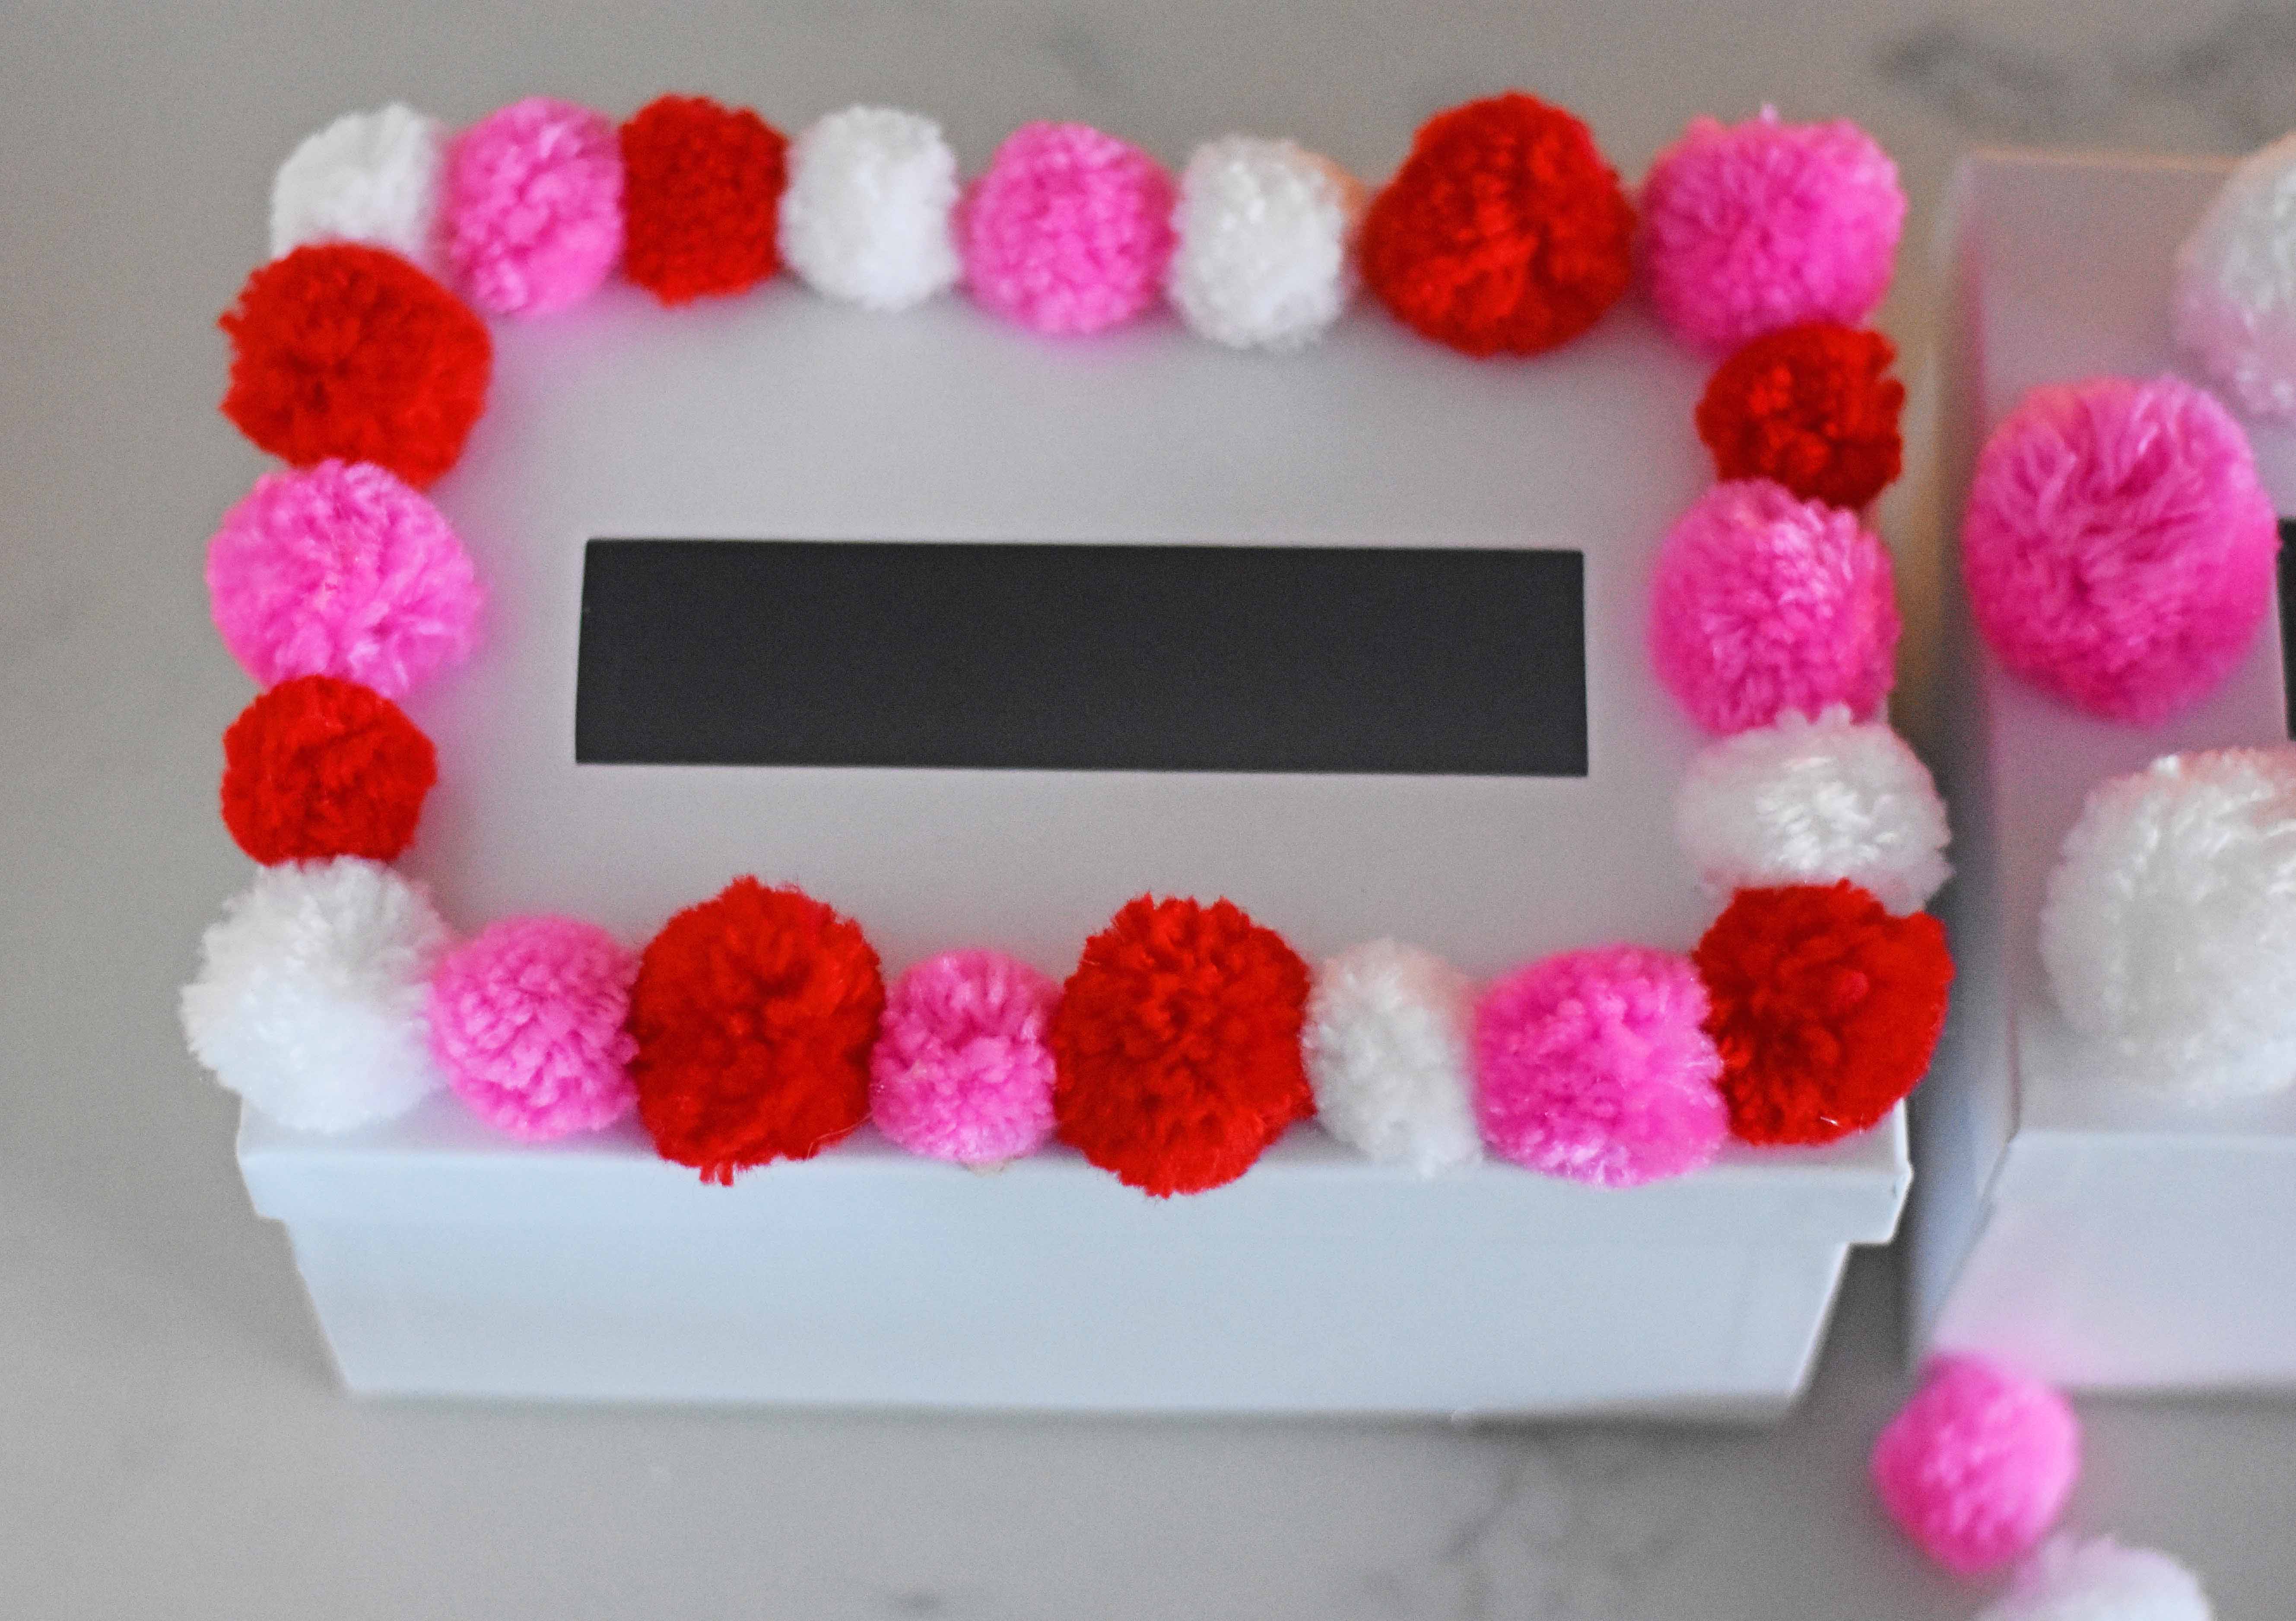 How to decorate Valentine's Day boxes with pom poms. Pom Poms Valentine's Day boxes.  Easy Valentine's Day boxes for school. Valentine's Day decorating ideas. www.modernhoney.com